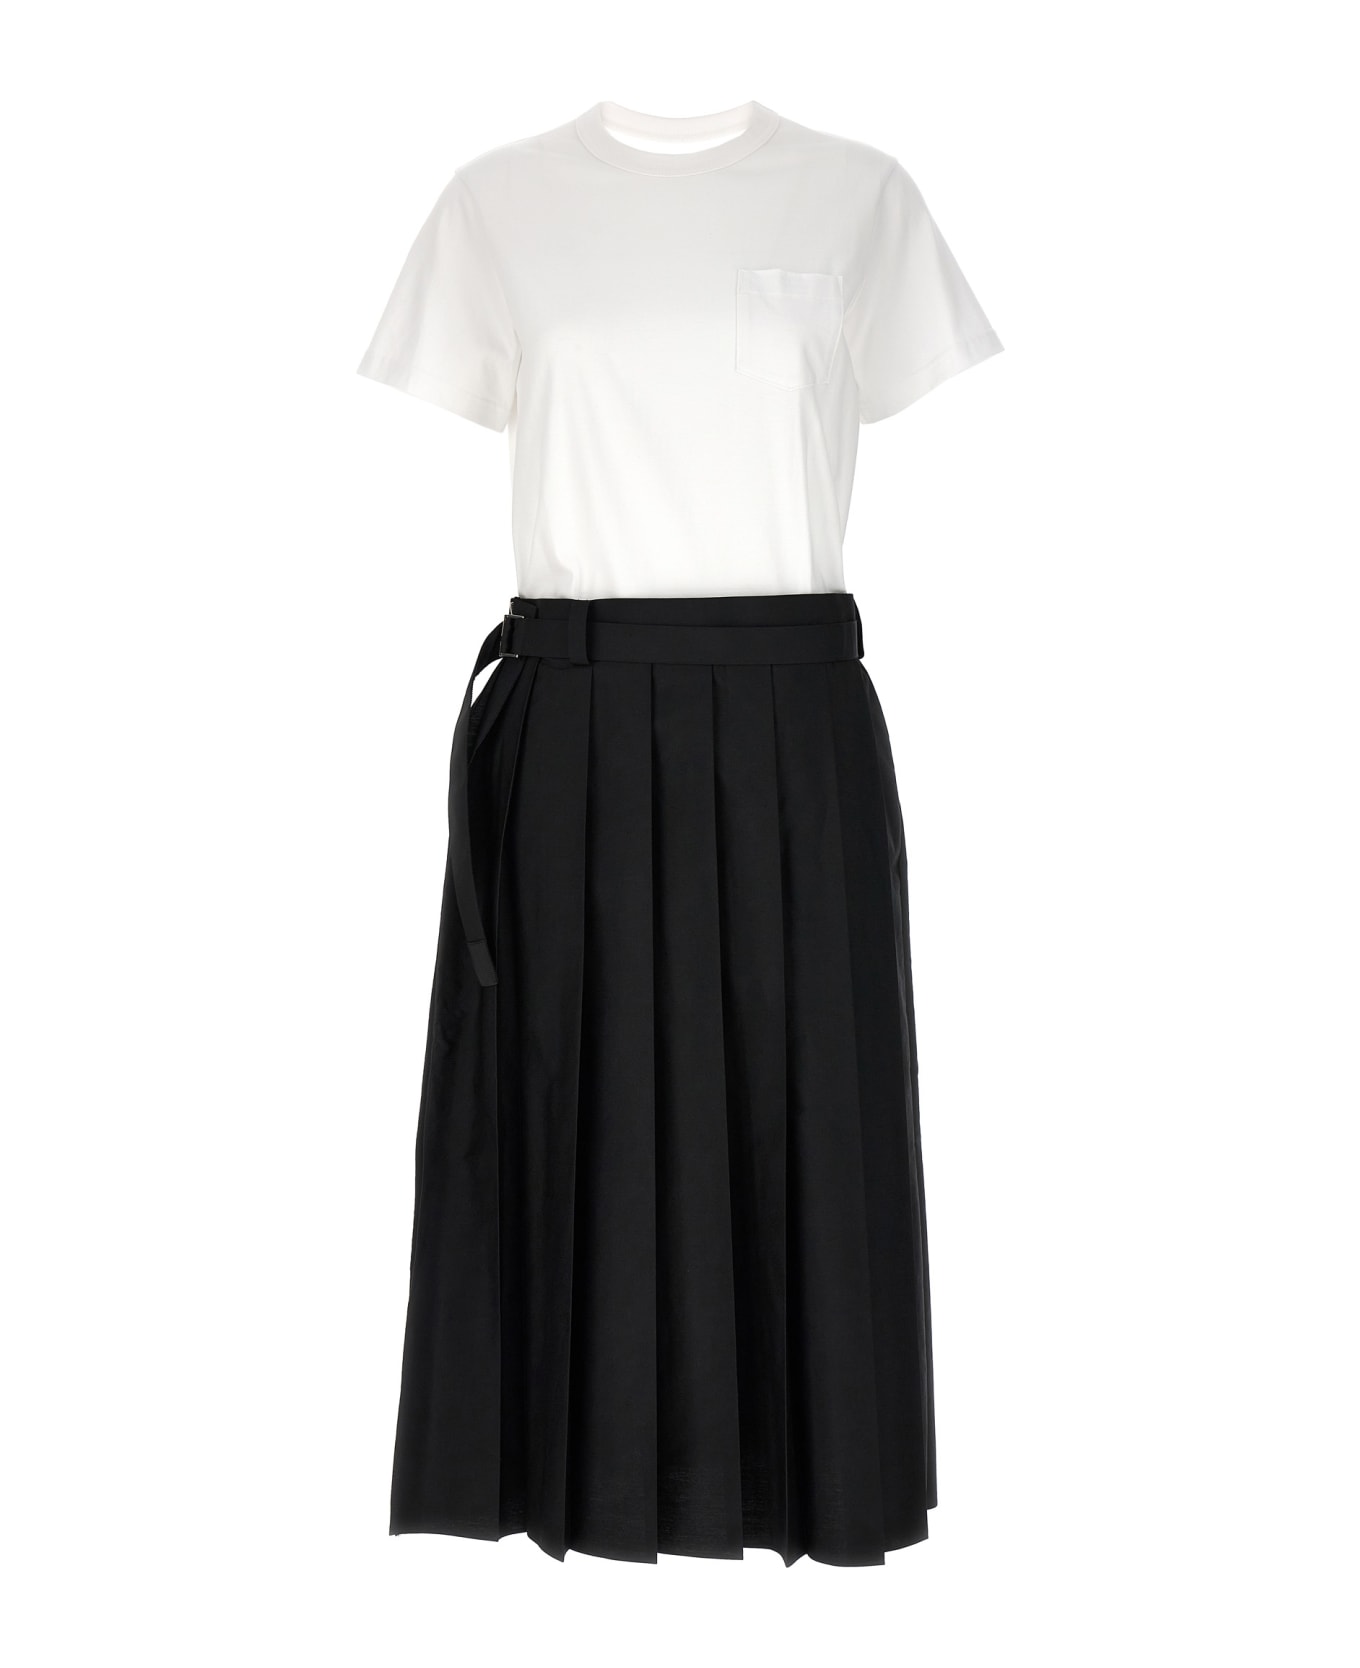 Sacai Pleated Skirt Dress - White/Black